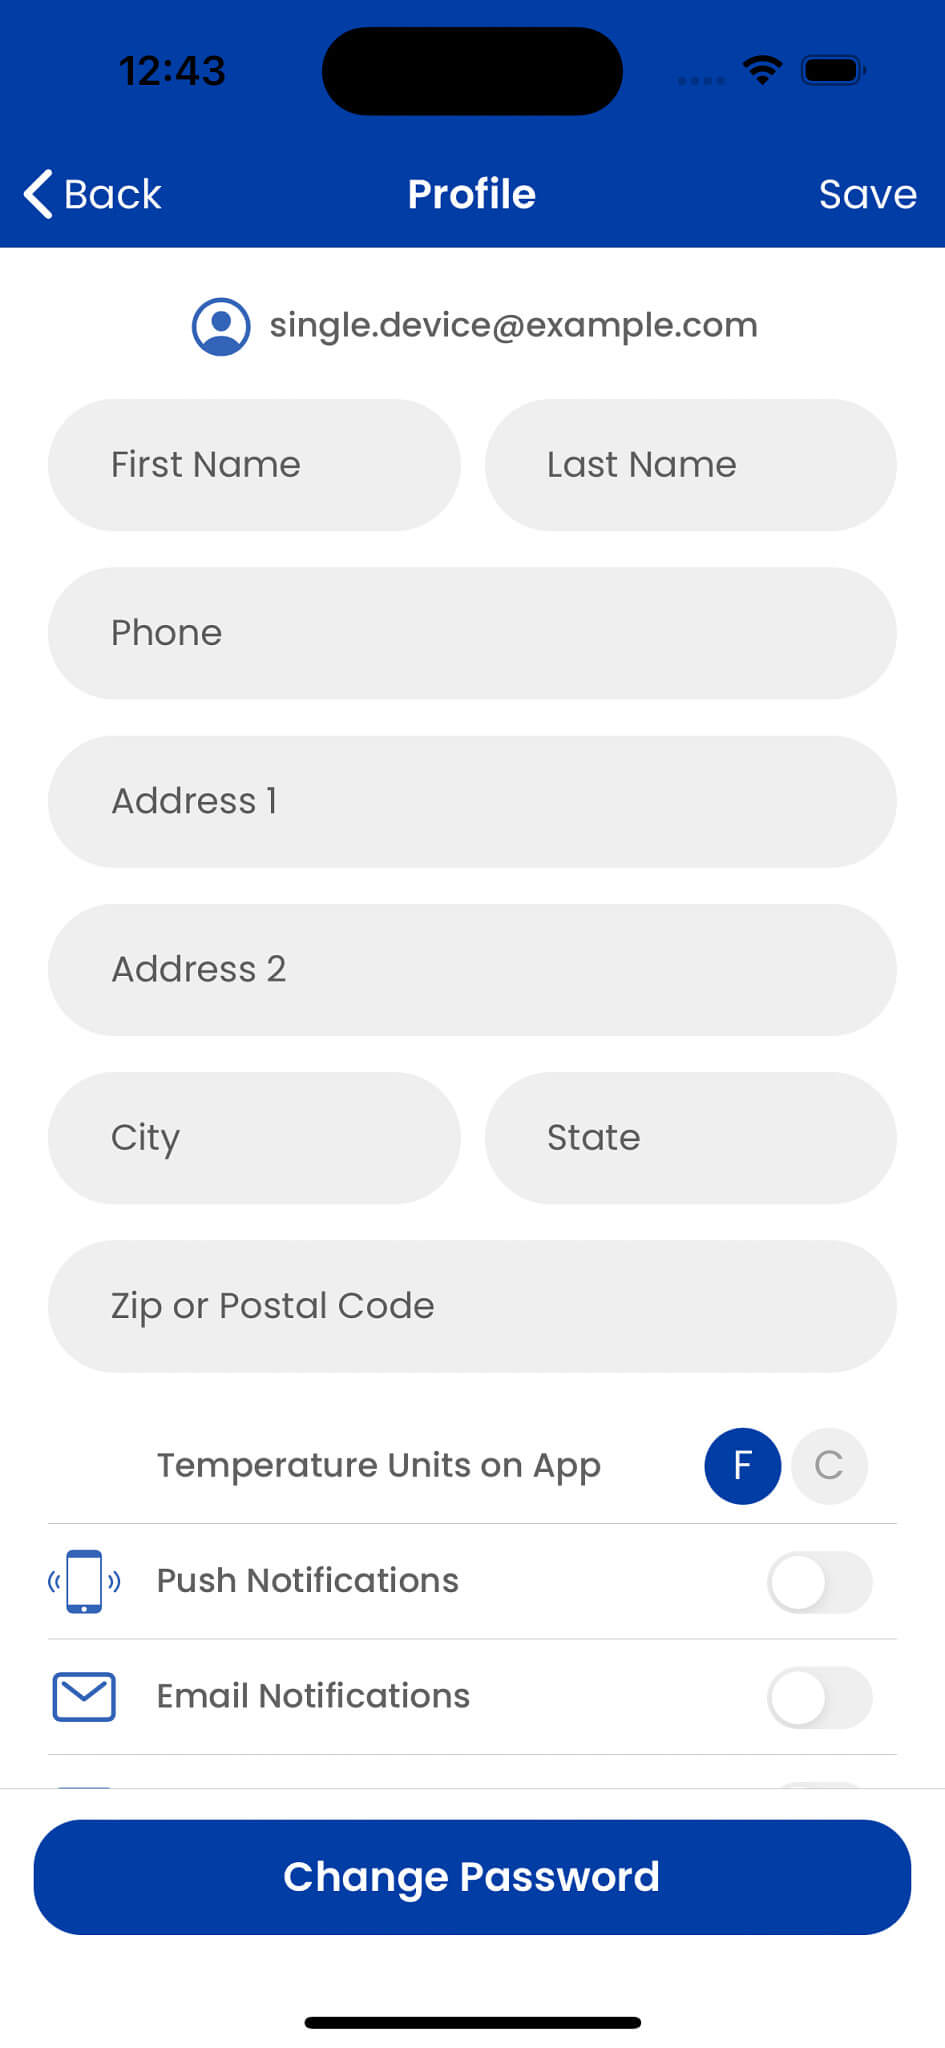 aprilaire wi fi thermostat app profile screen user guide photo